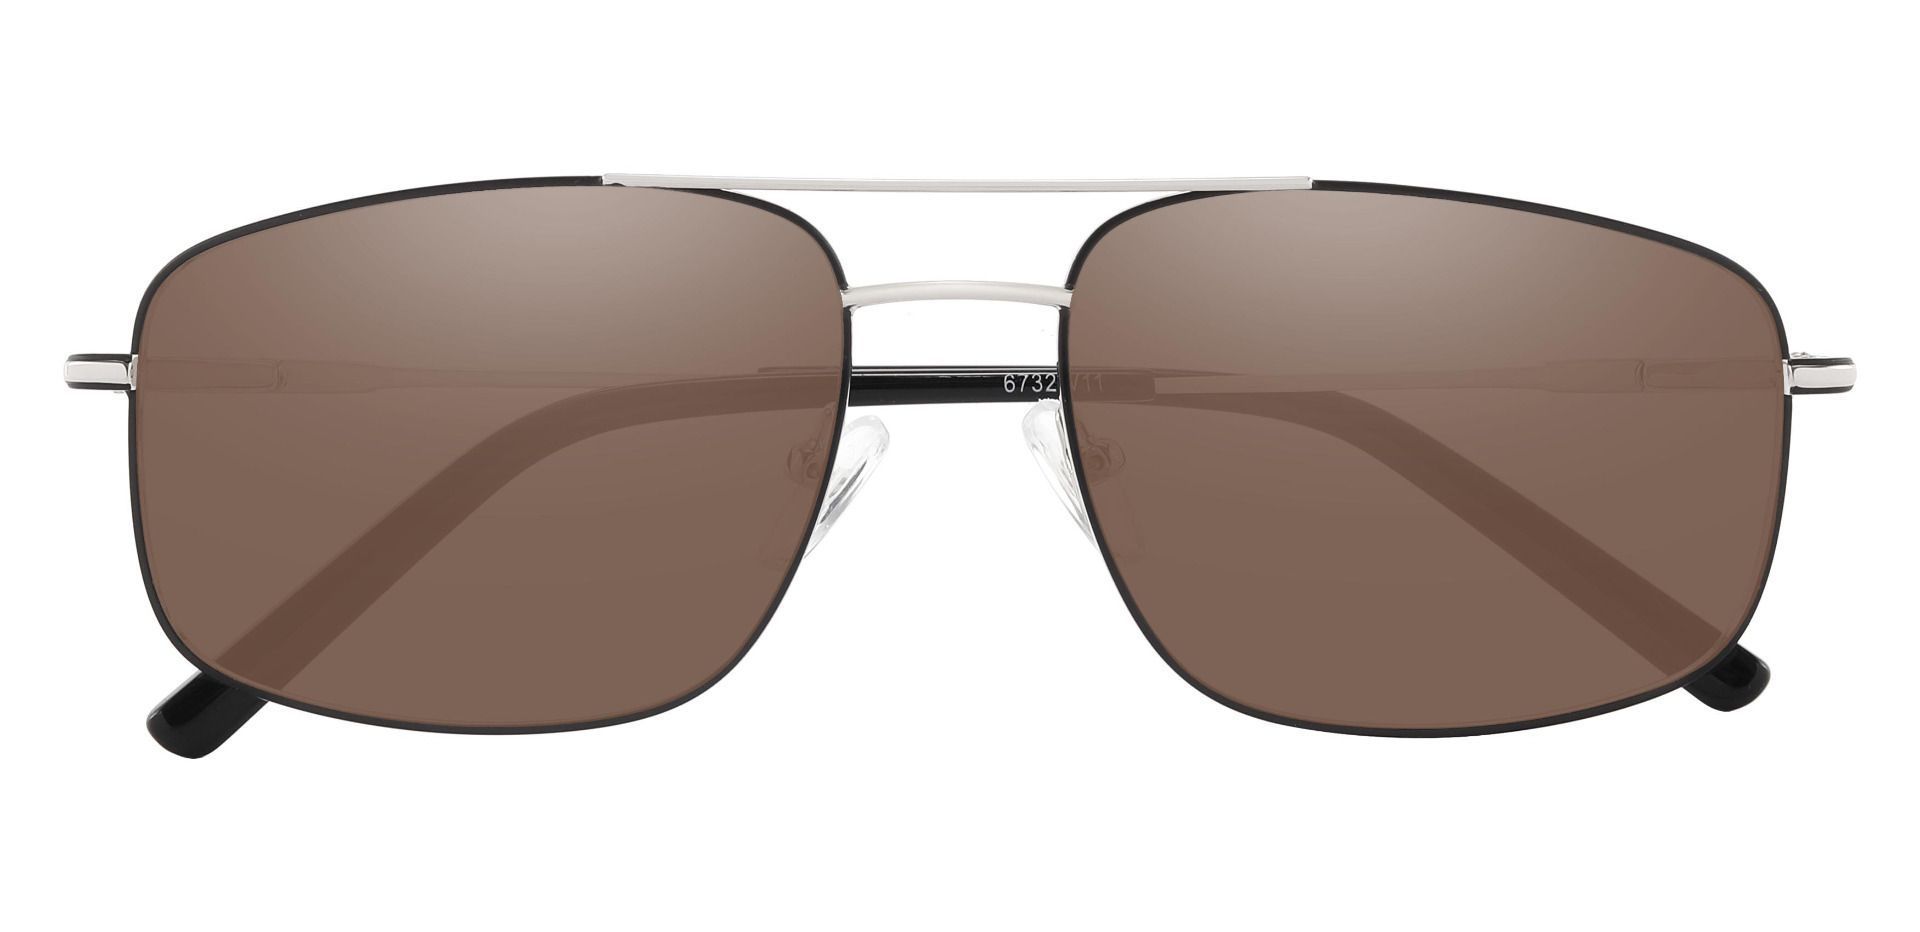 Turner Aviator Prescription Sunglasses - Silver Frame With Brown Lenses